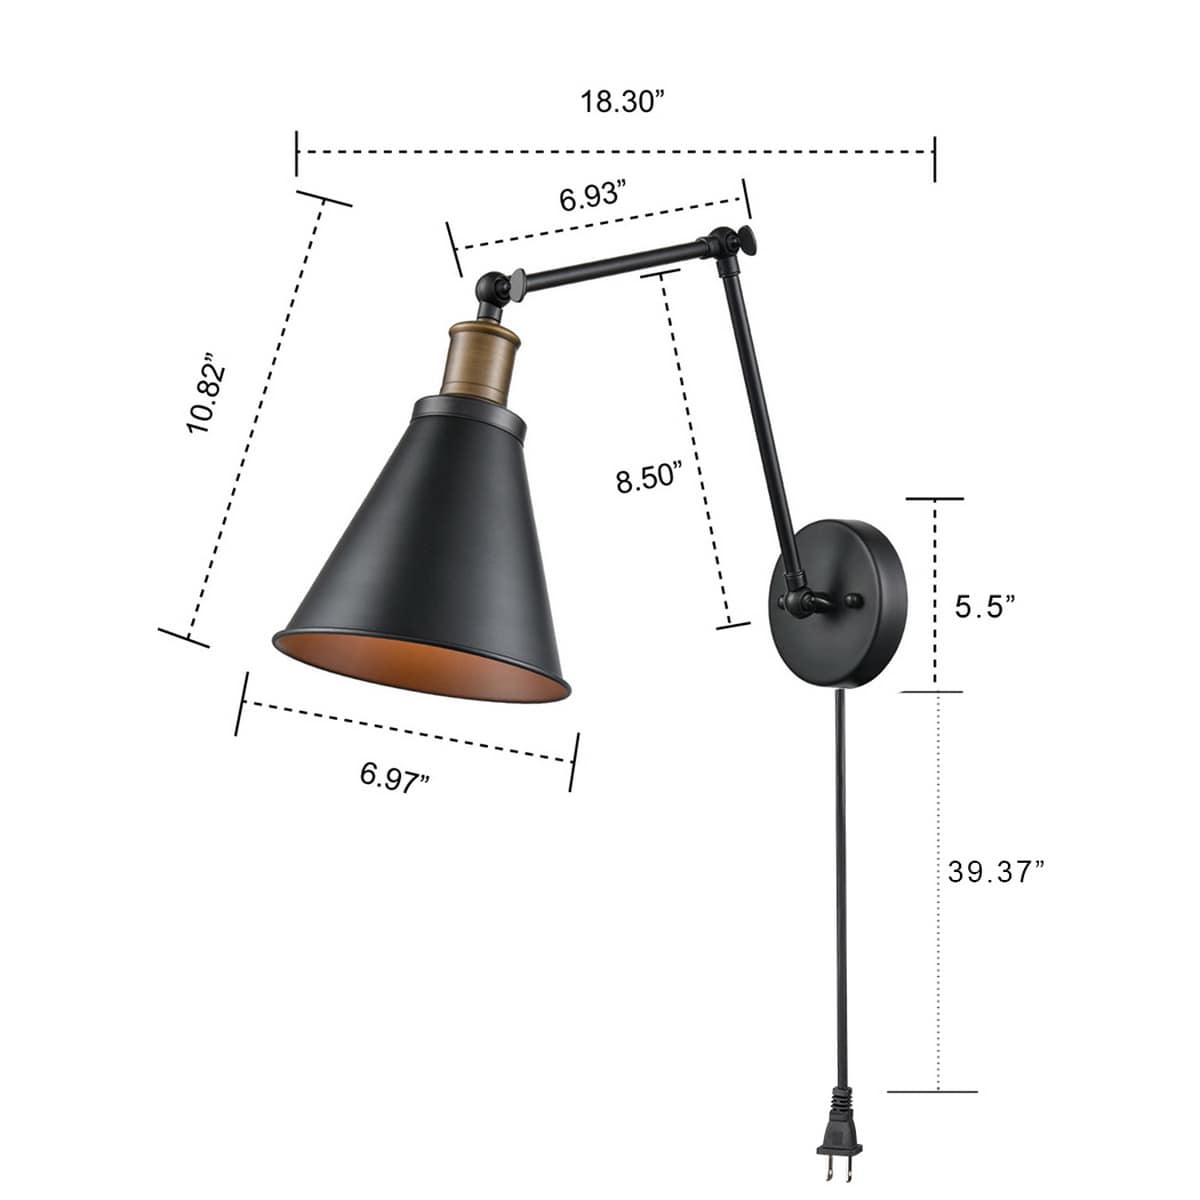 Industrial Swing Arm Plug-in Wall Light Black 2 Pack Fixture